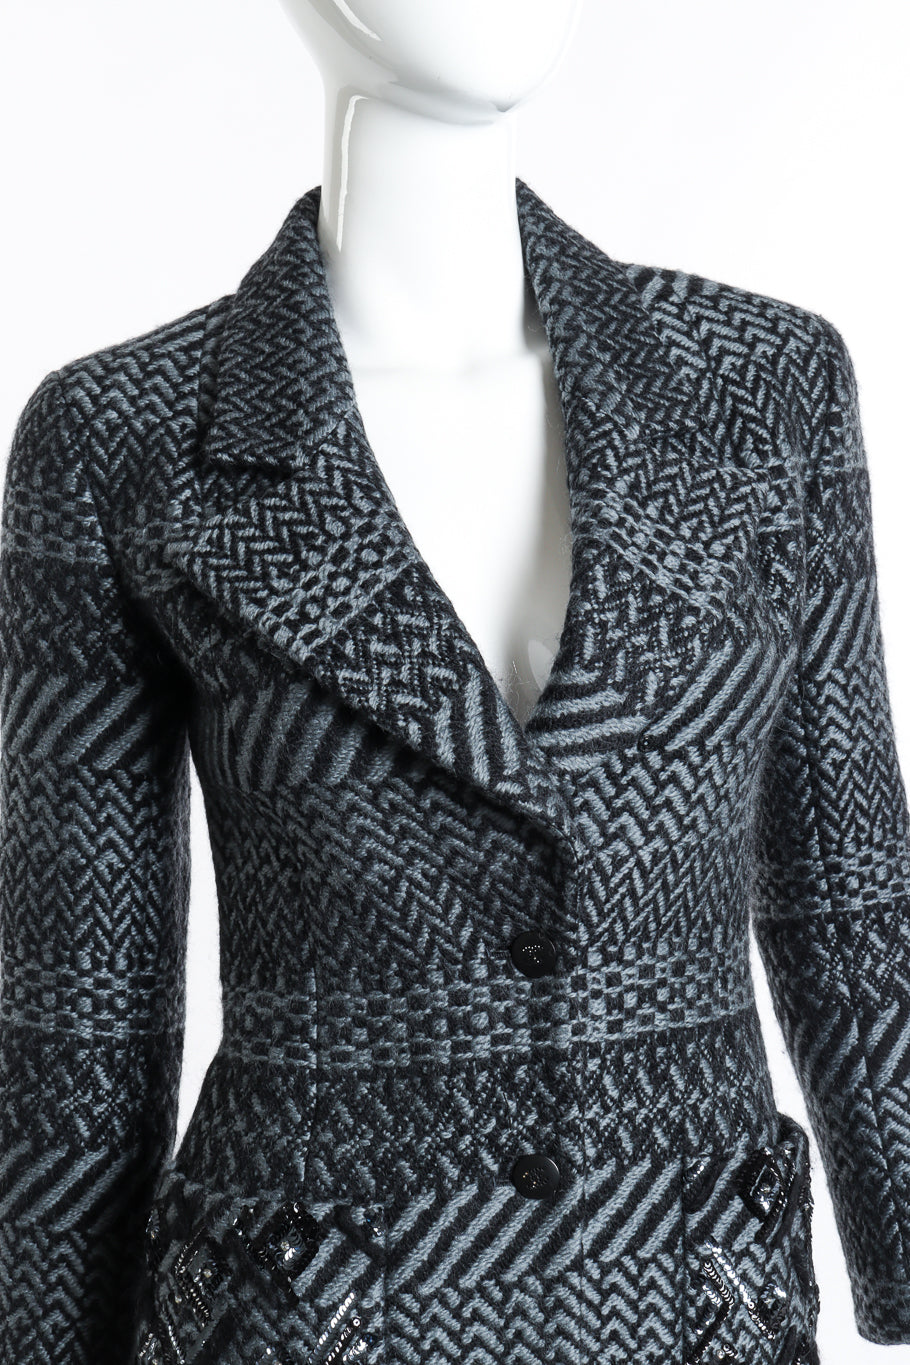 Chanel 2000 F/W Knit Wool Jacket front on mannequin closeup @recess la